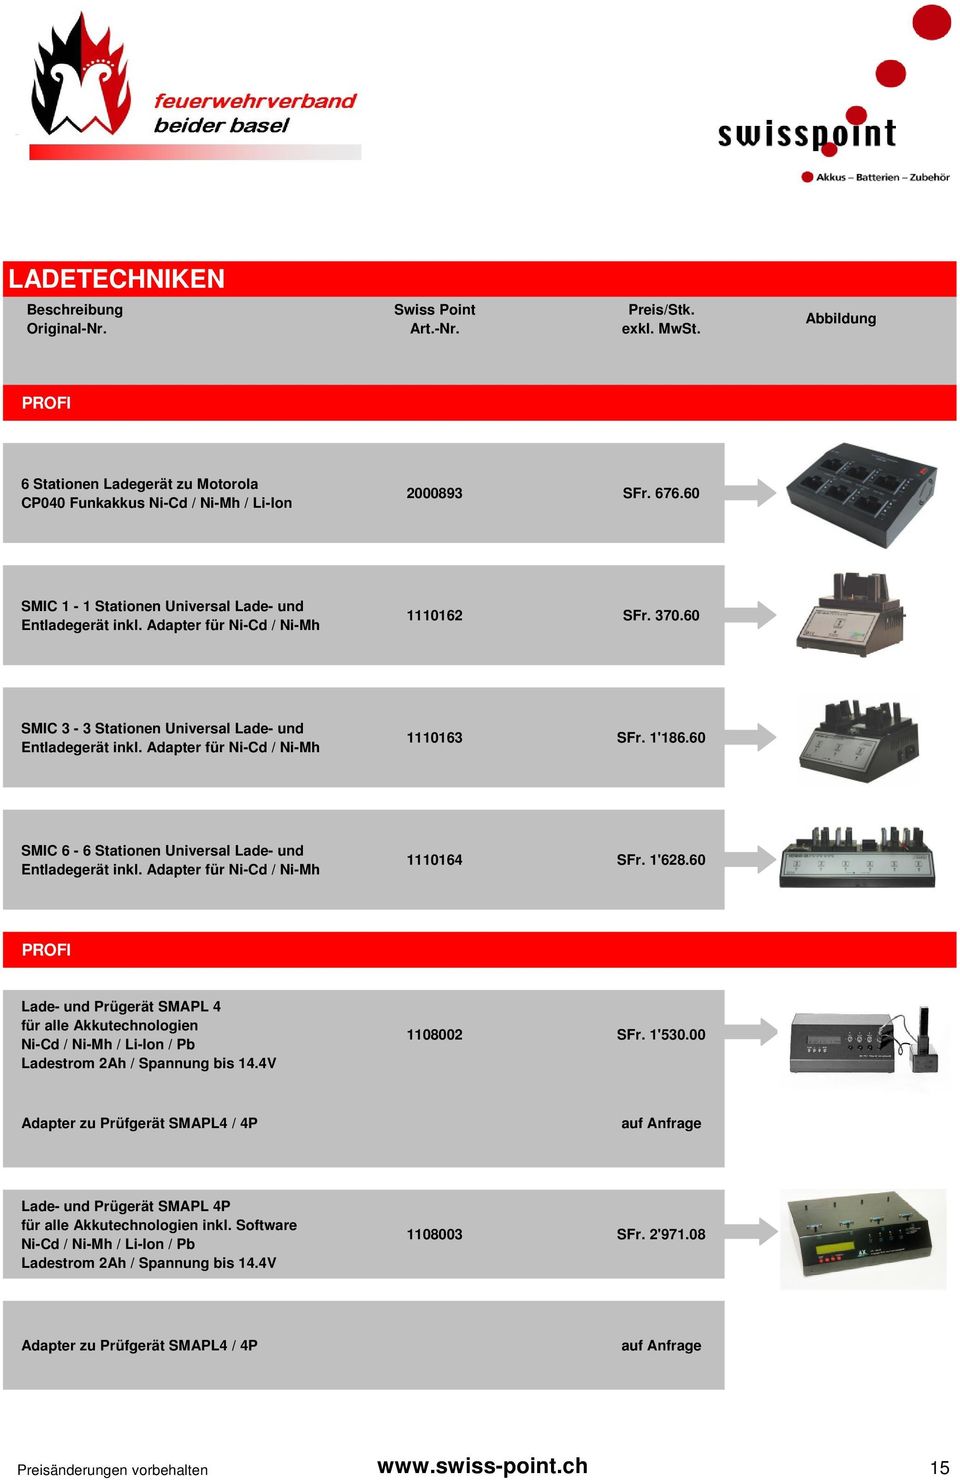 Adapter für Ni-Cd / Ni-Mh 1110163 SFr. 1'186.60 SMIC 6-6 Stationen Universal Lade- und Entladegerät inkl. Adapter für Ni-Cd / Ni-Mh 1110164 SFr. 1'628.